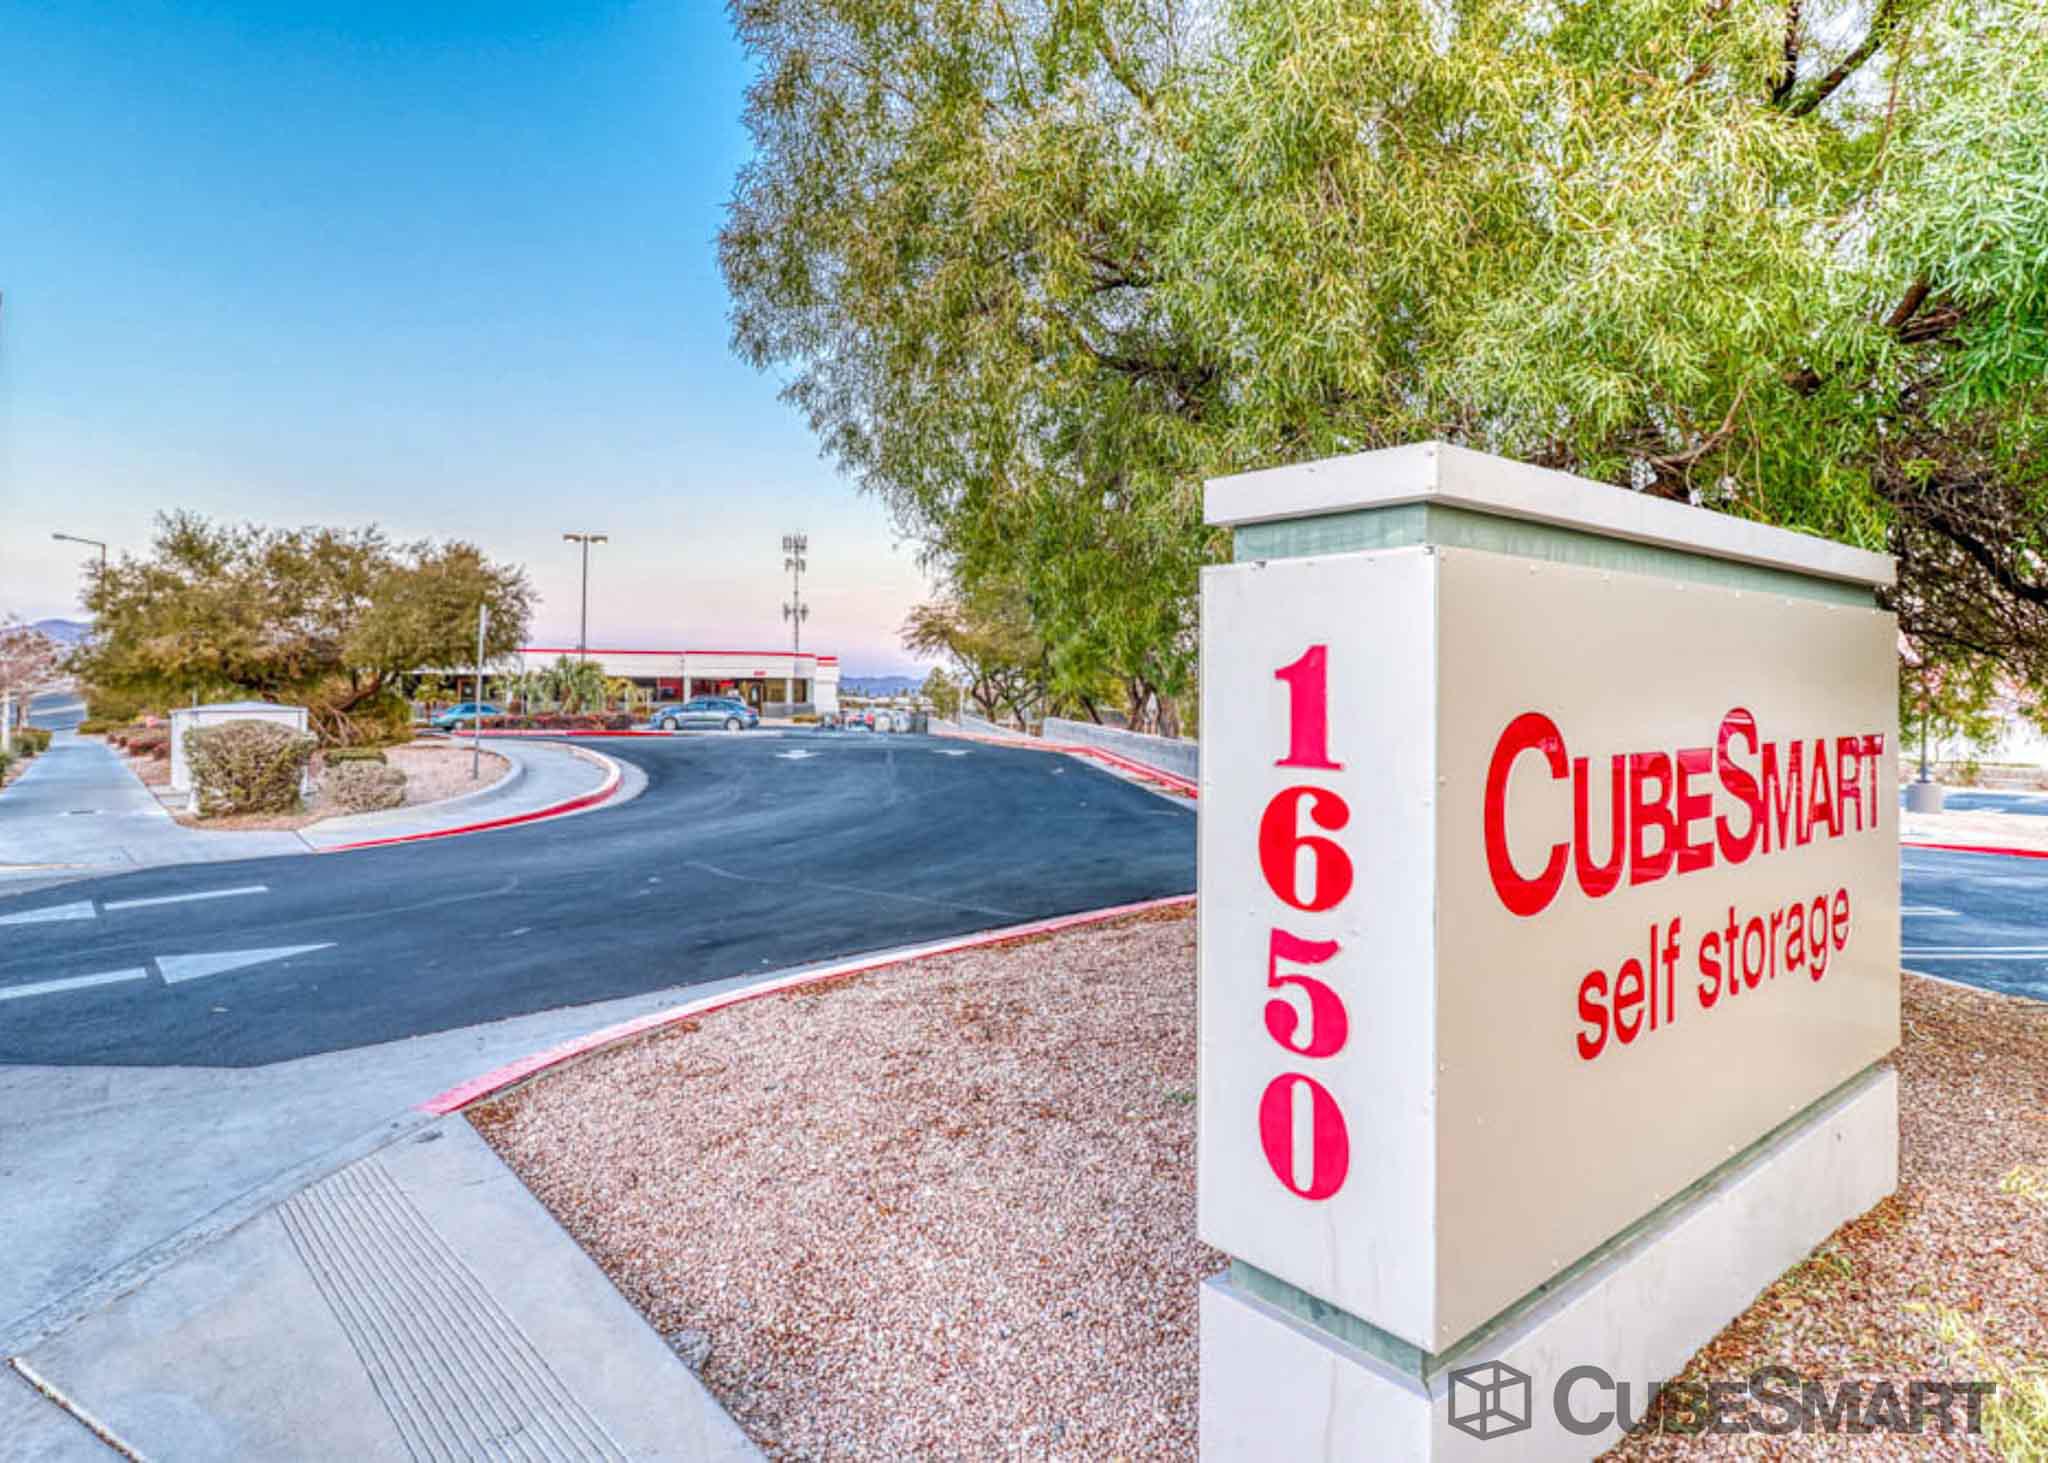 CubeSmart Self Storage Las Vegas (702)889-8900